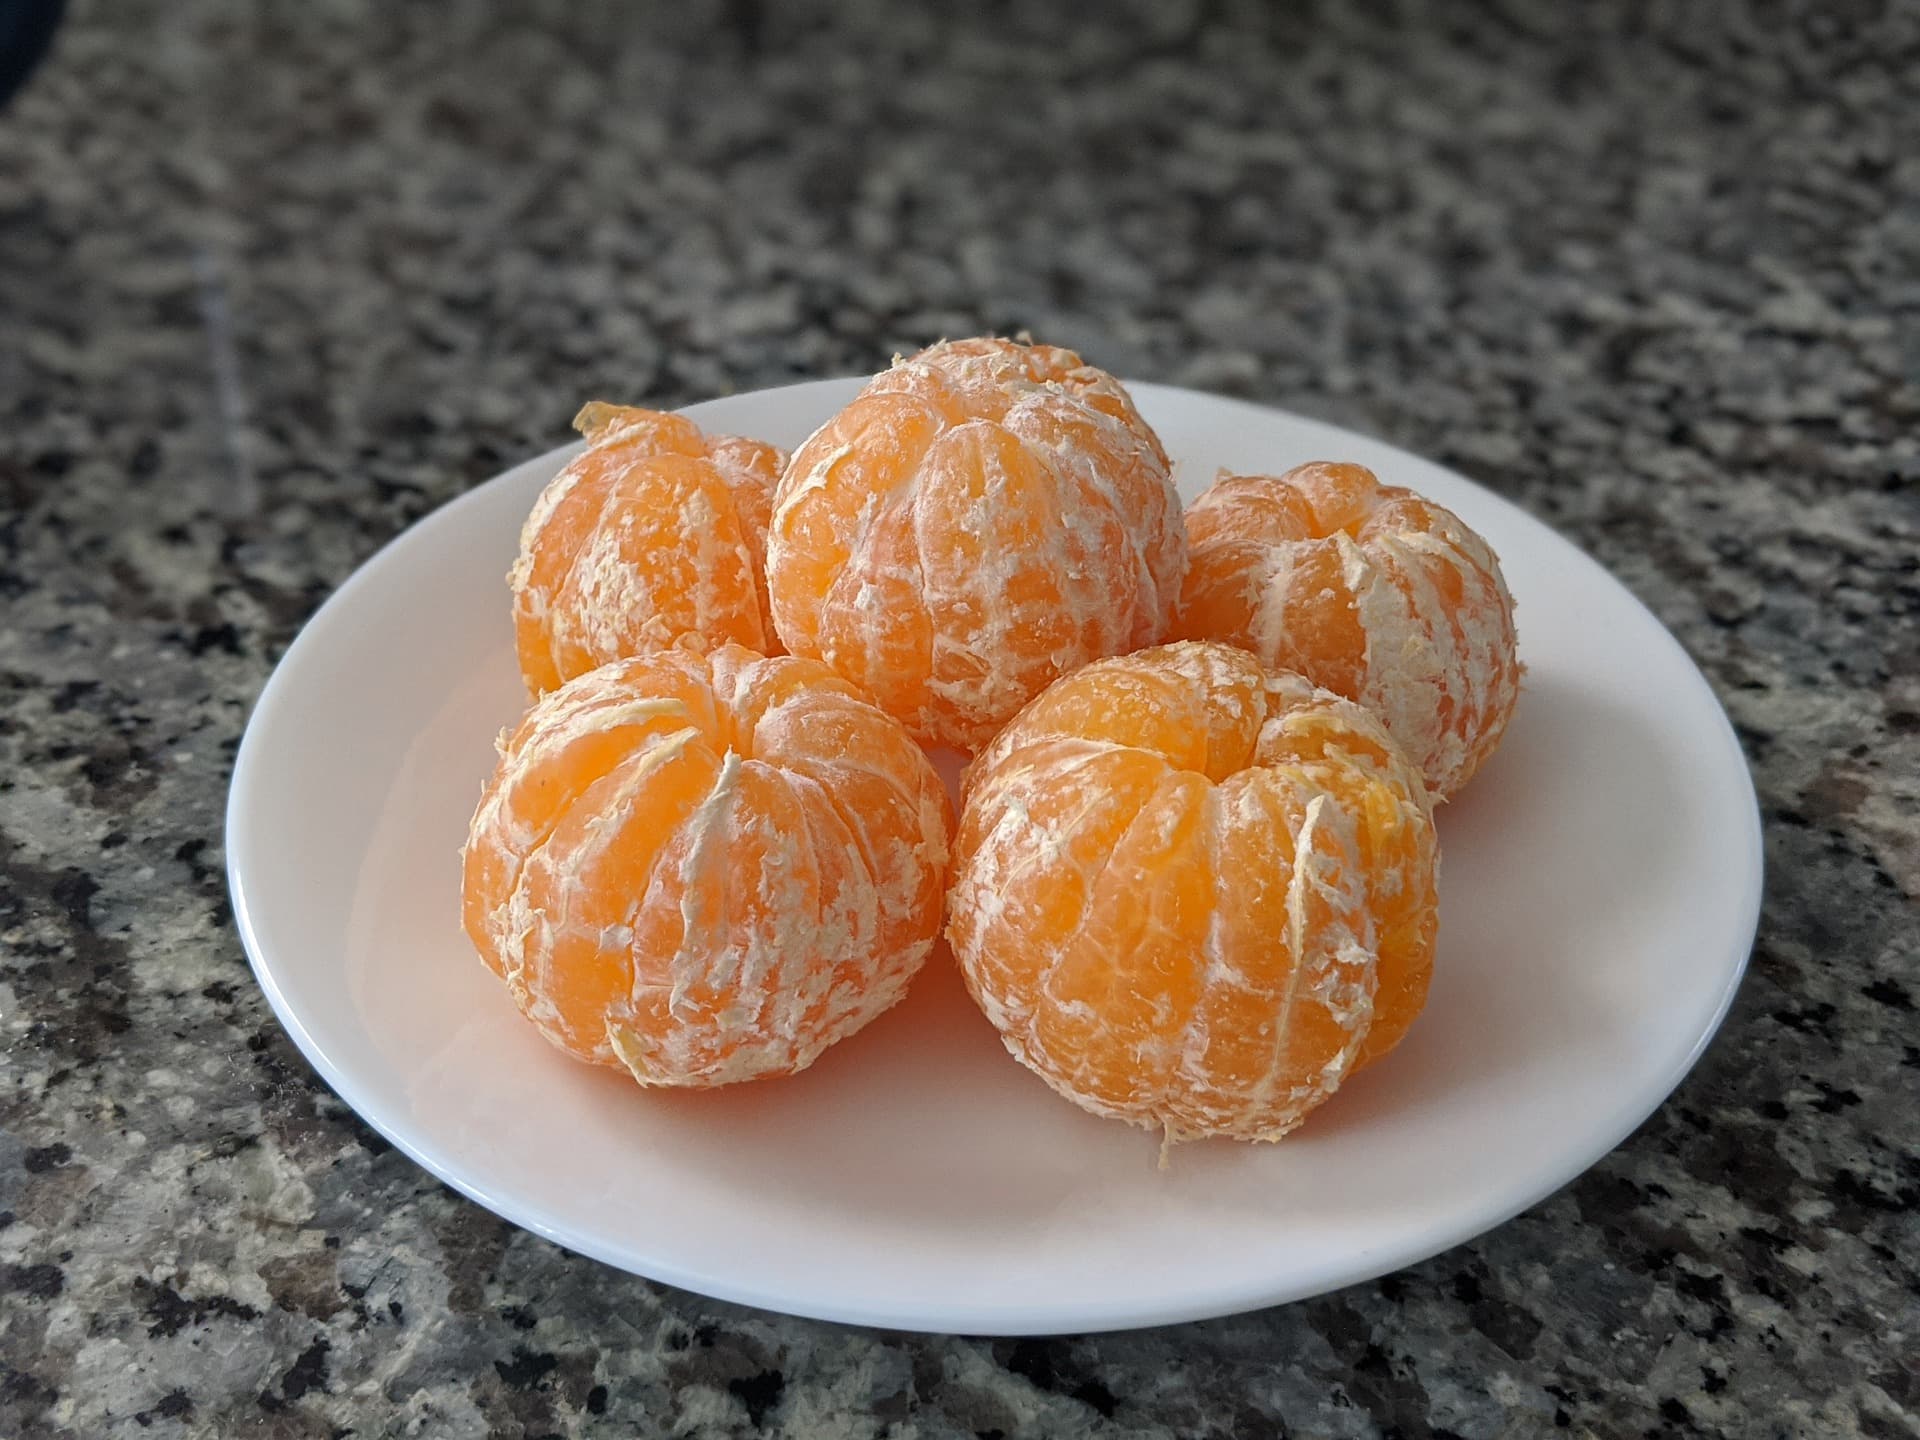 sweet tangerine fruit